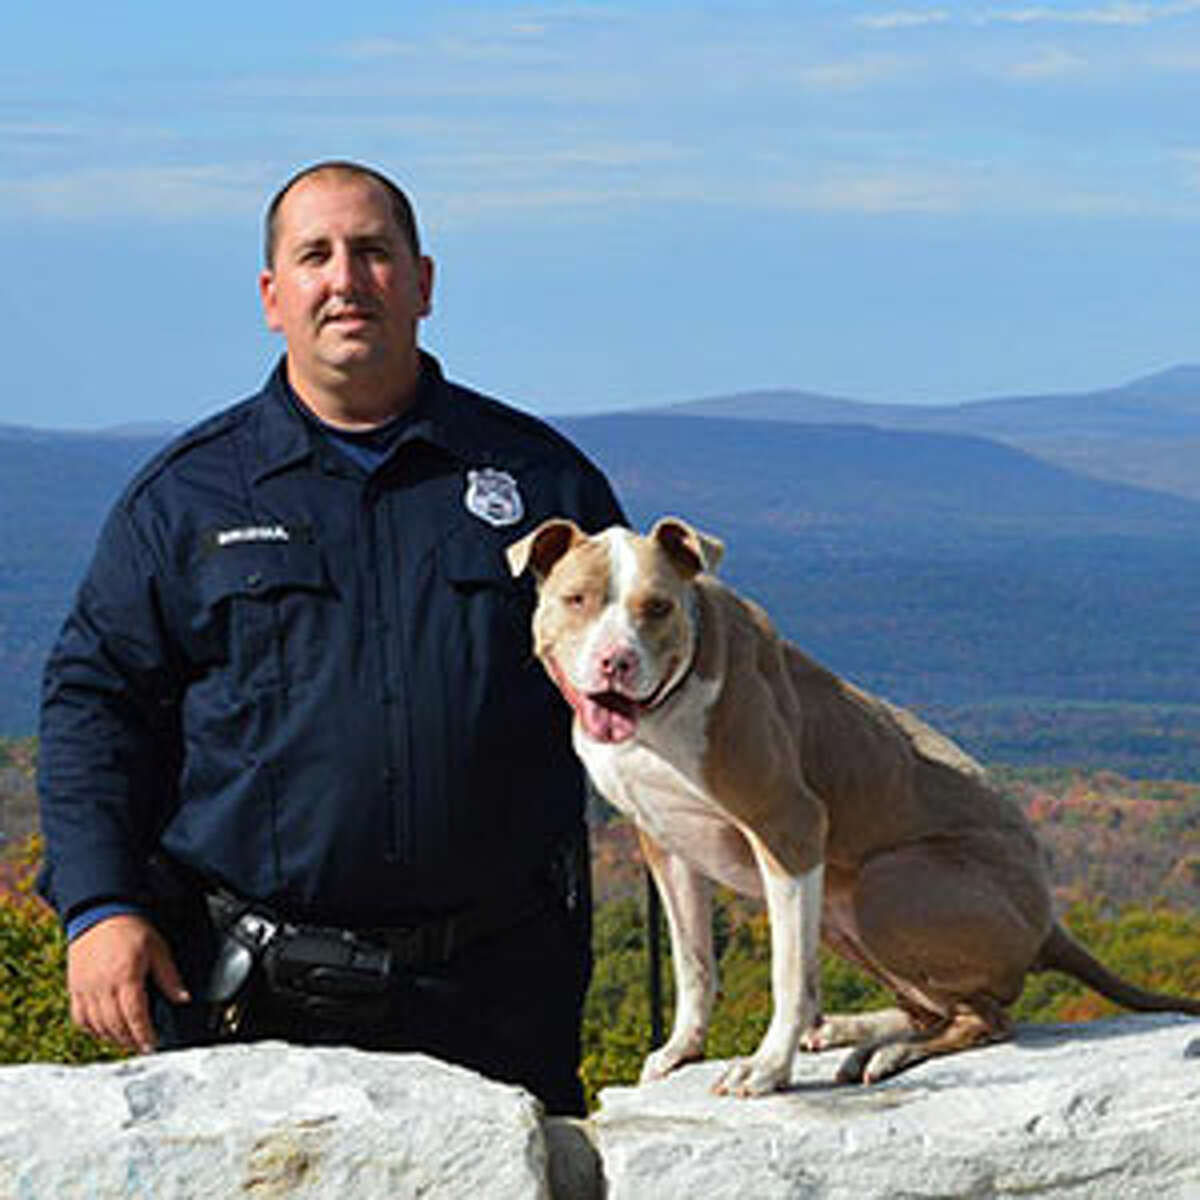 K9 Kiah poses with her handler, Poughkeepsie police Officer Justin Bruzgul. (Animal Farm Foundation)